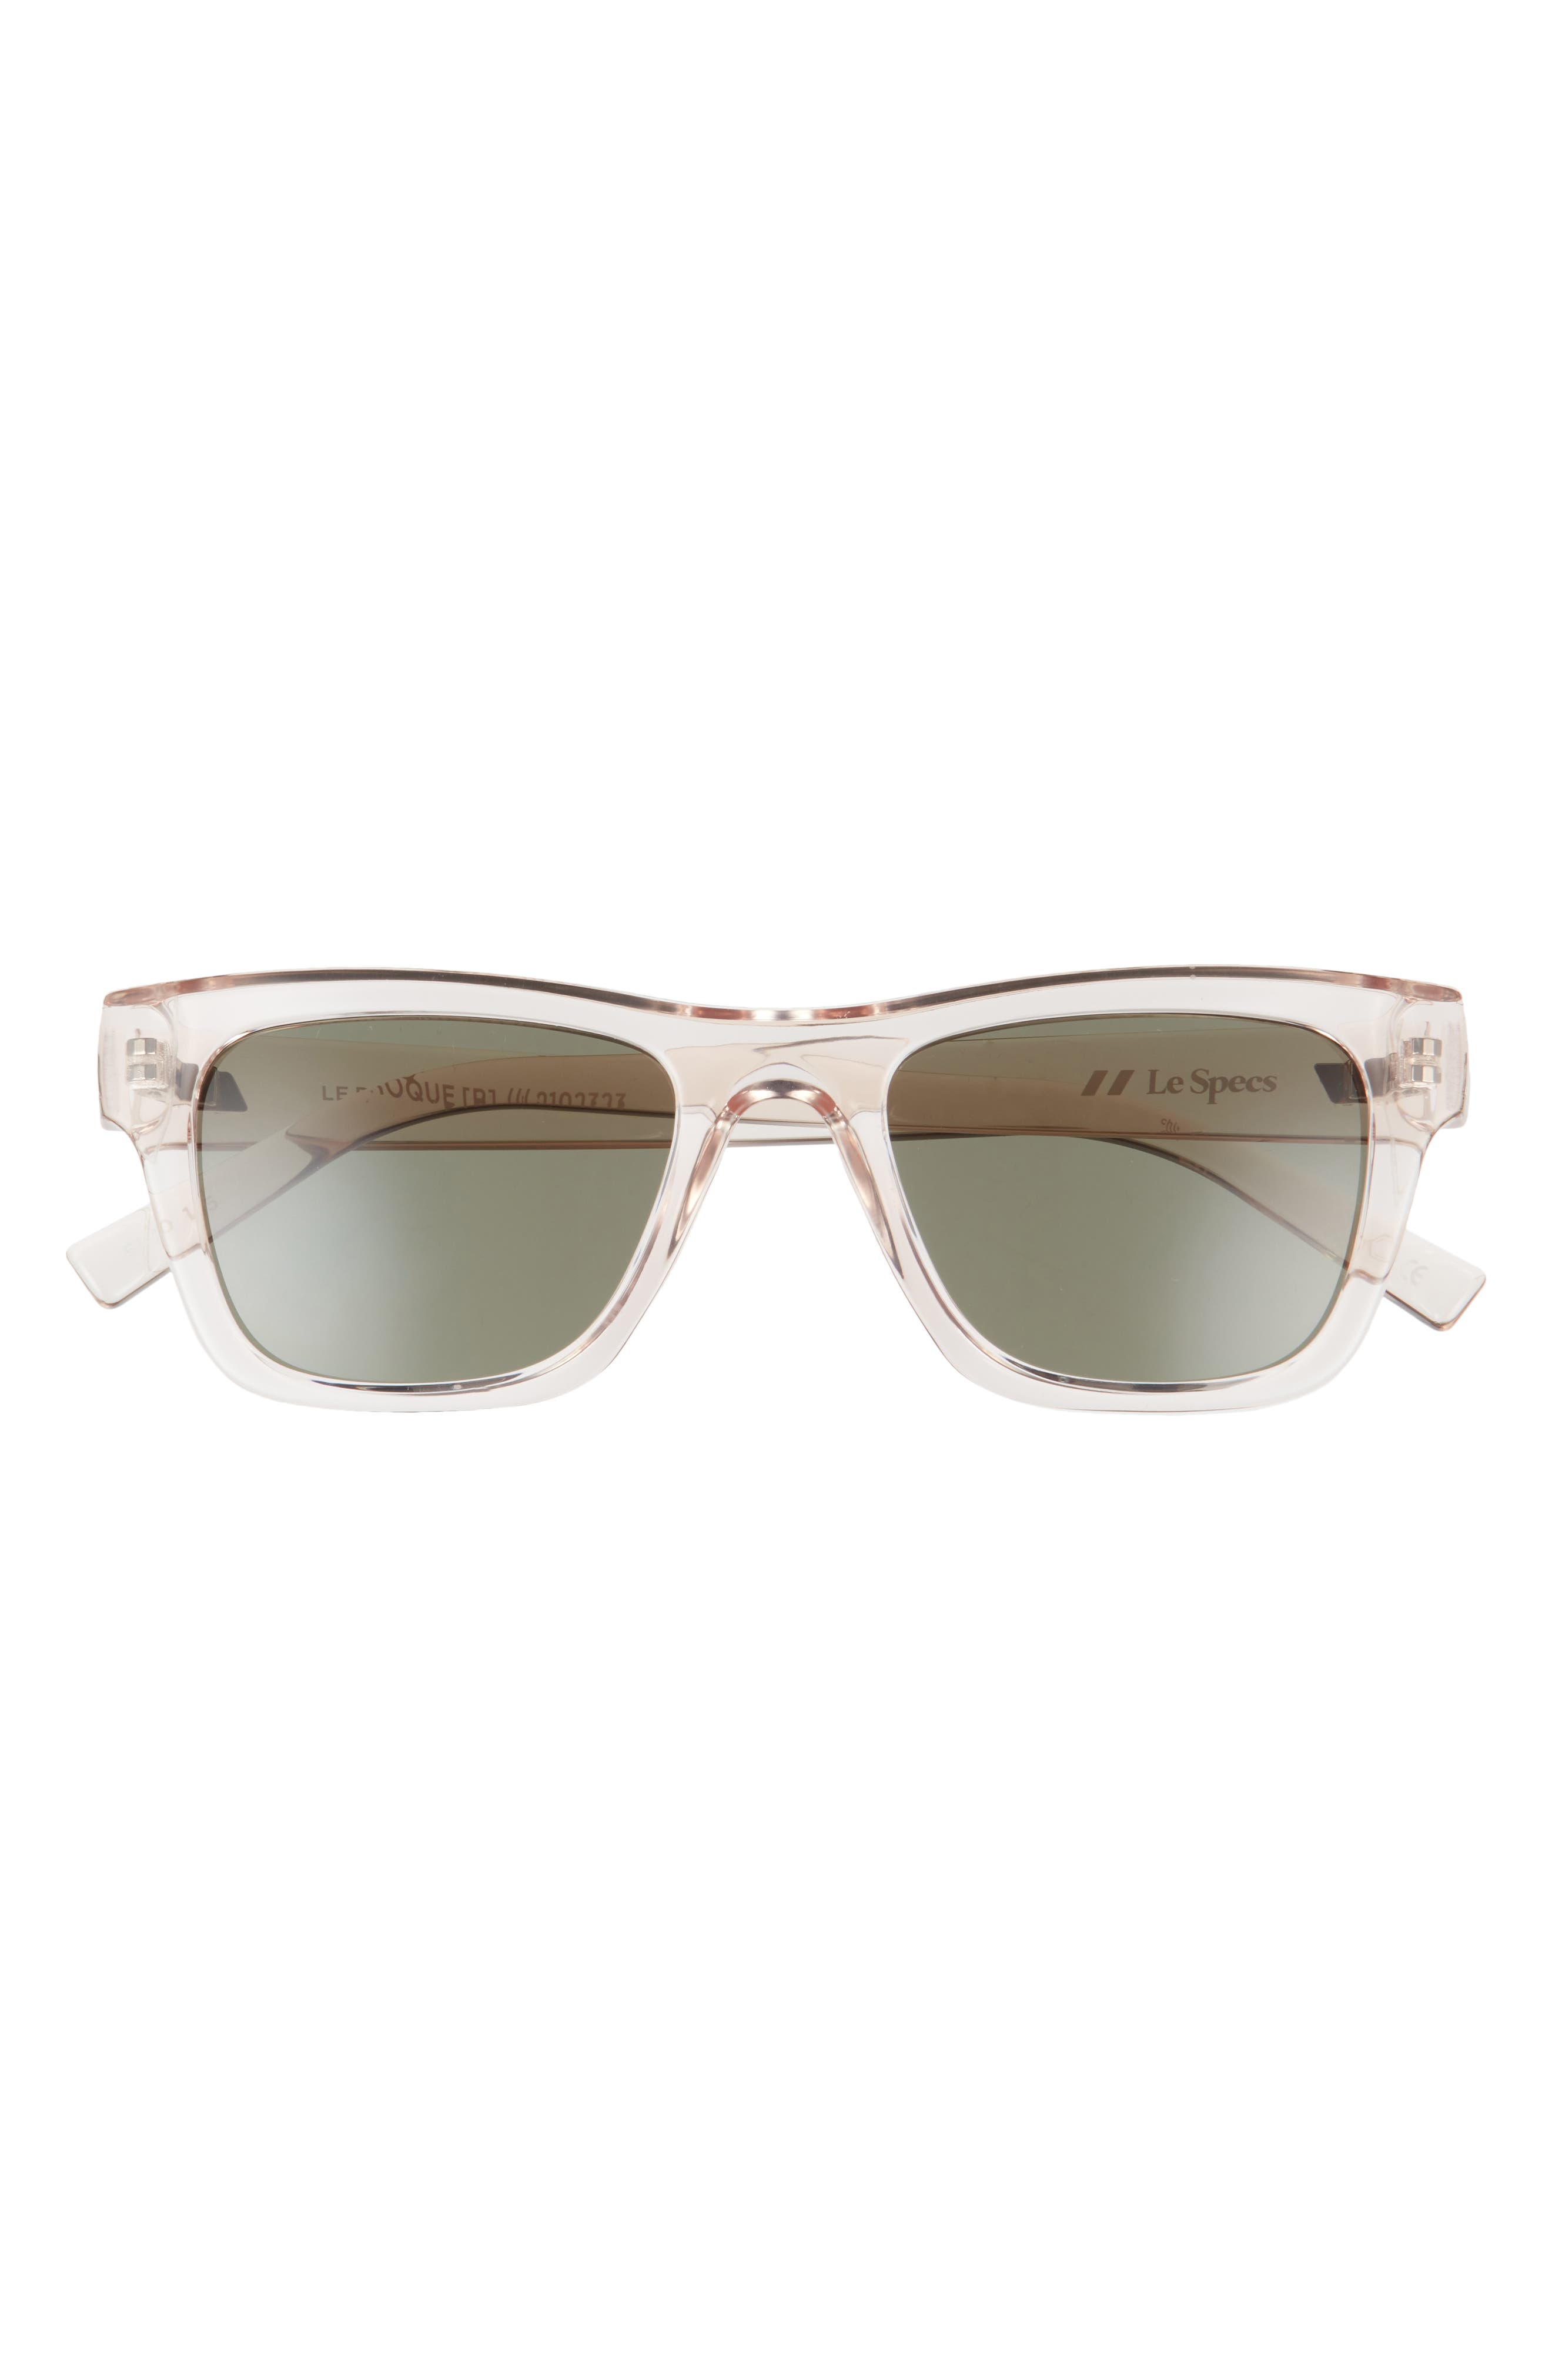 Le Specs Le Phoque 51mm Rectangular Sunglasses in Sand/Khaki Mono at Nordstrom